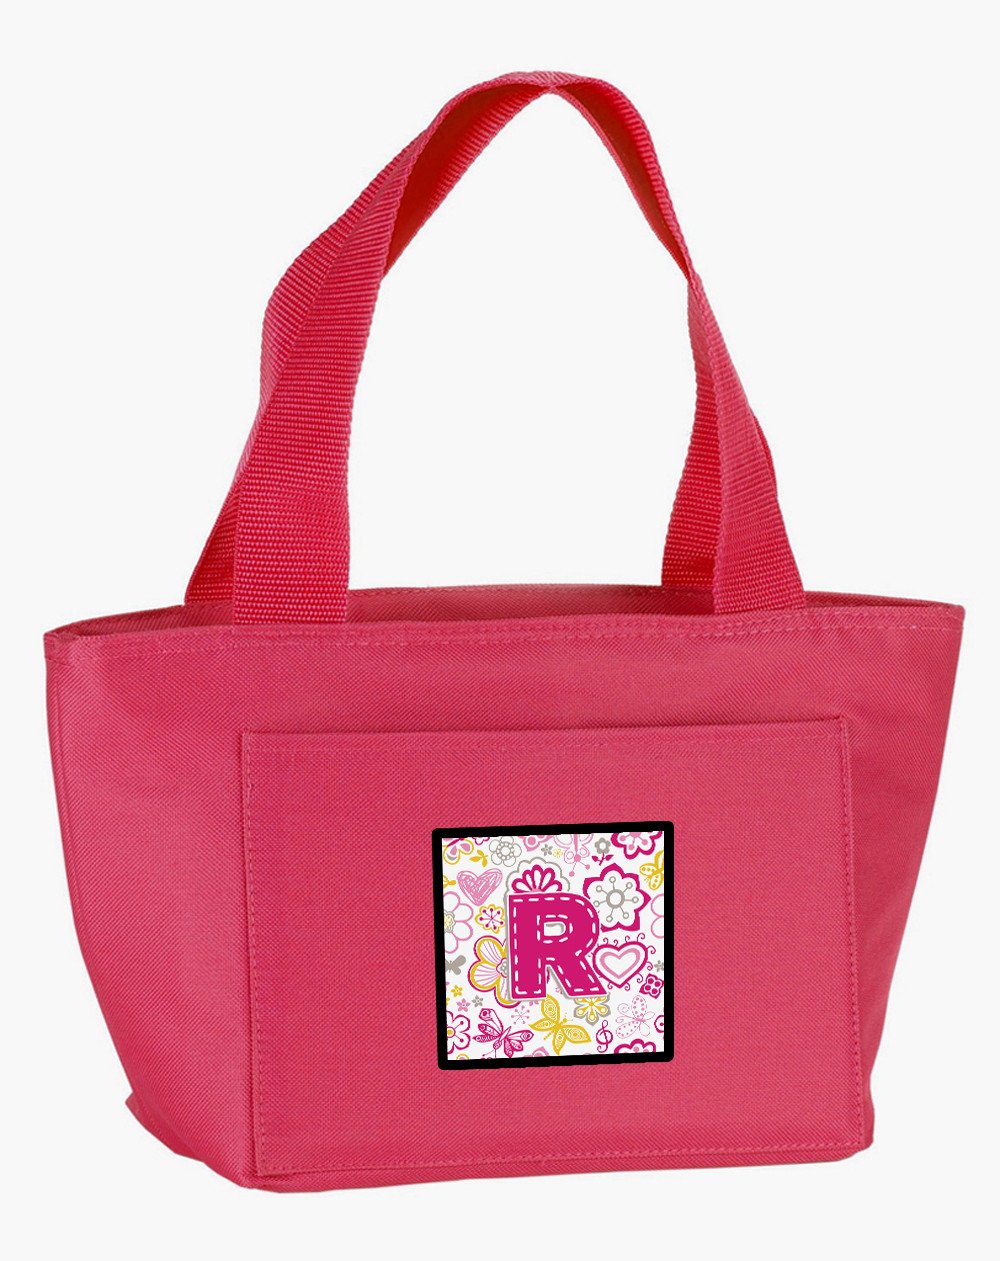 Letter R Flowers and Butterflies Pink Lunch Bag CJ2005-RPK-8808 by Caroline's Treasures